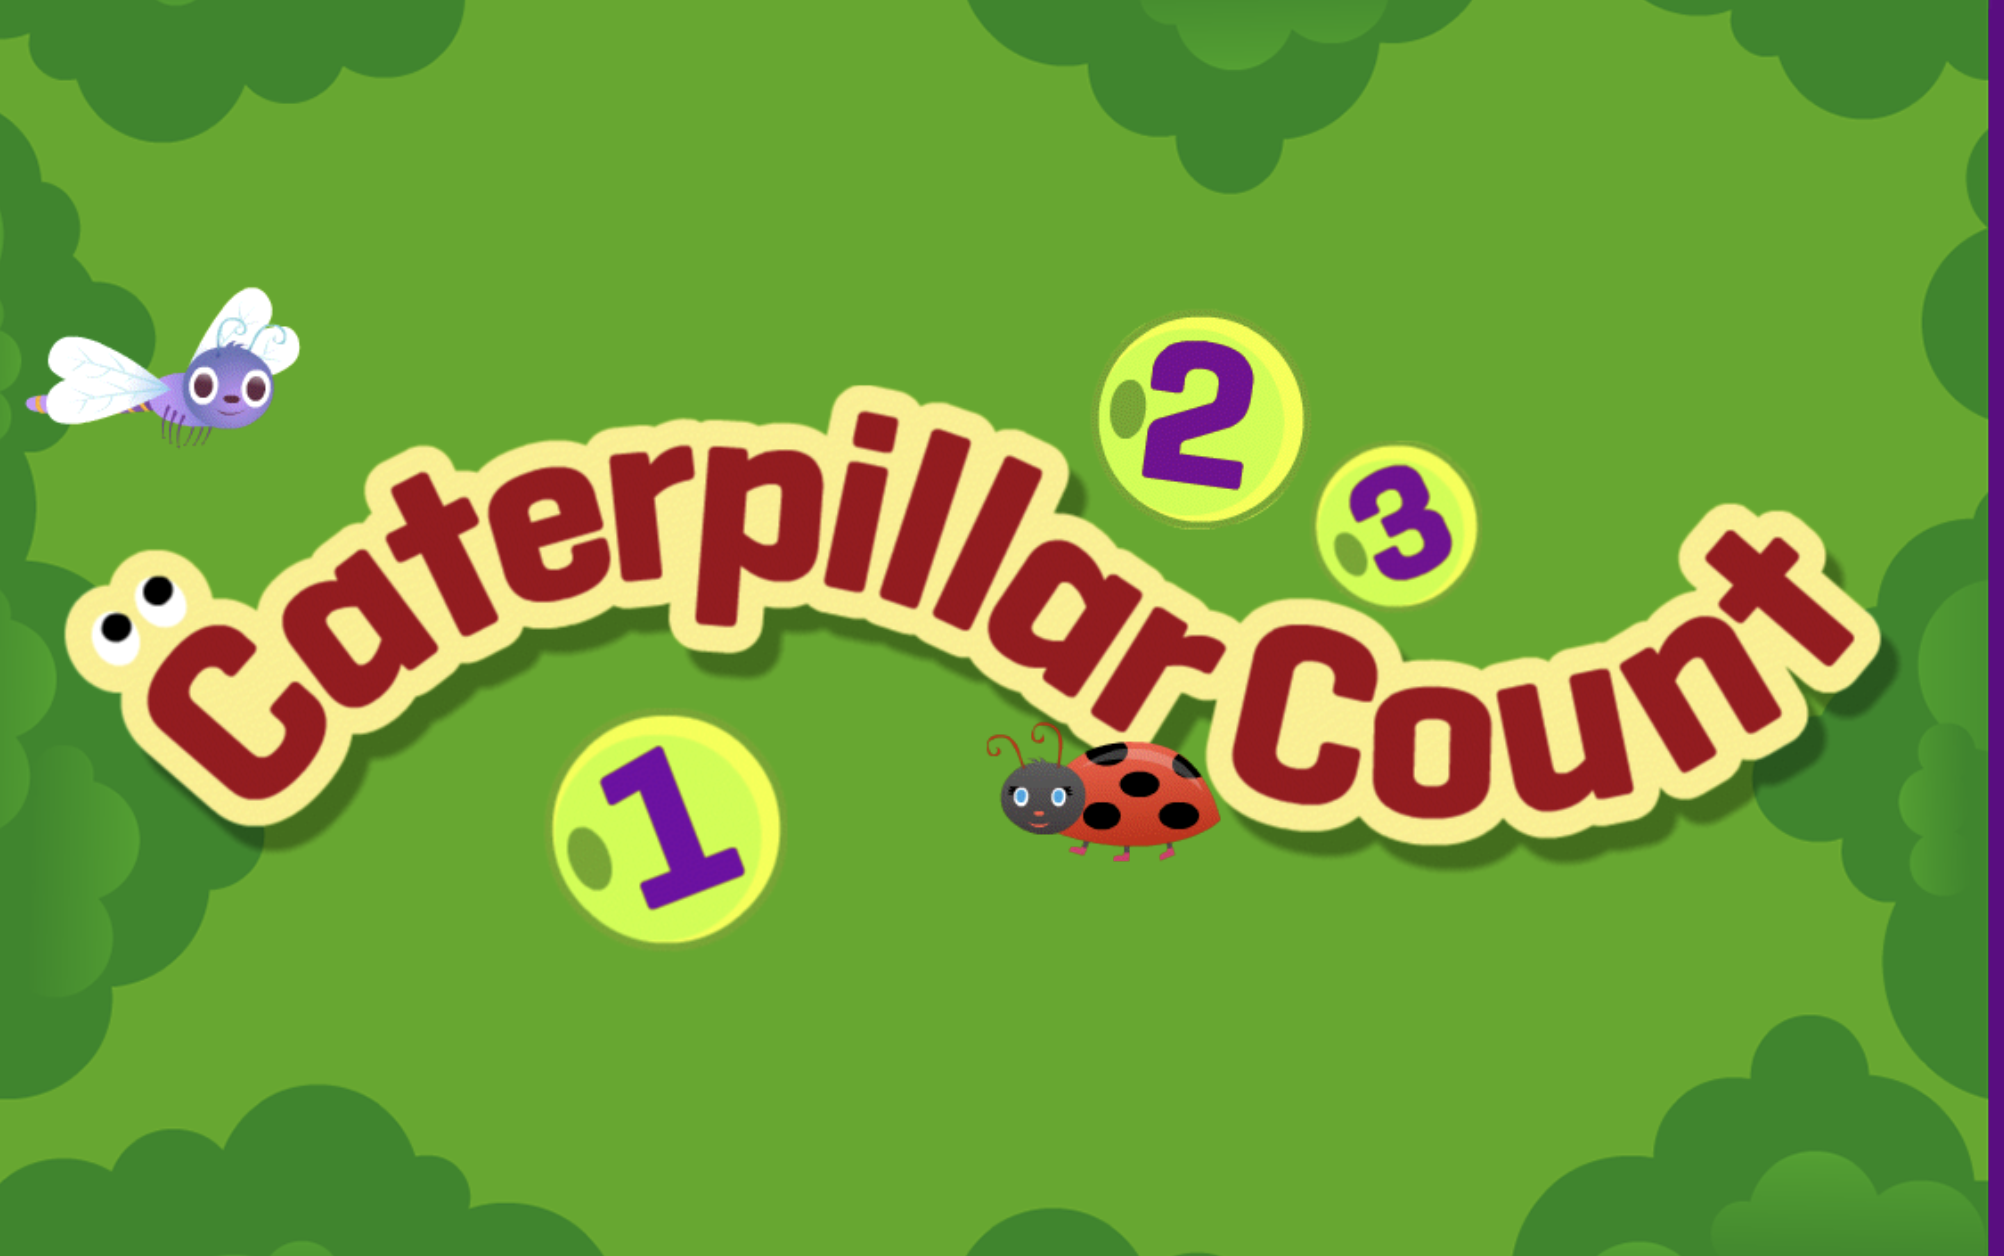 Caterpillar Count